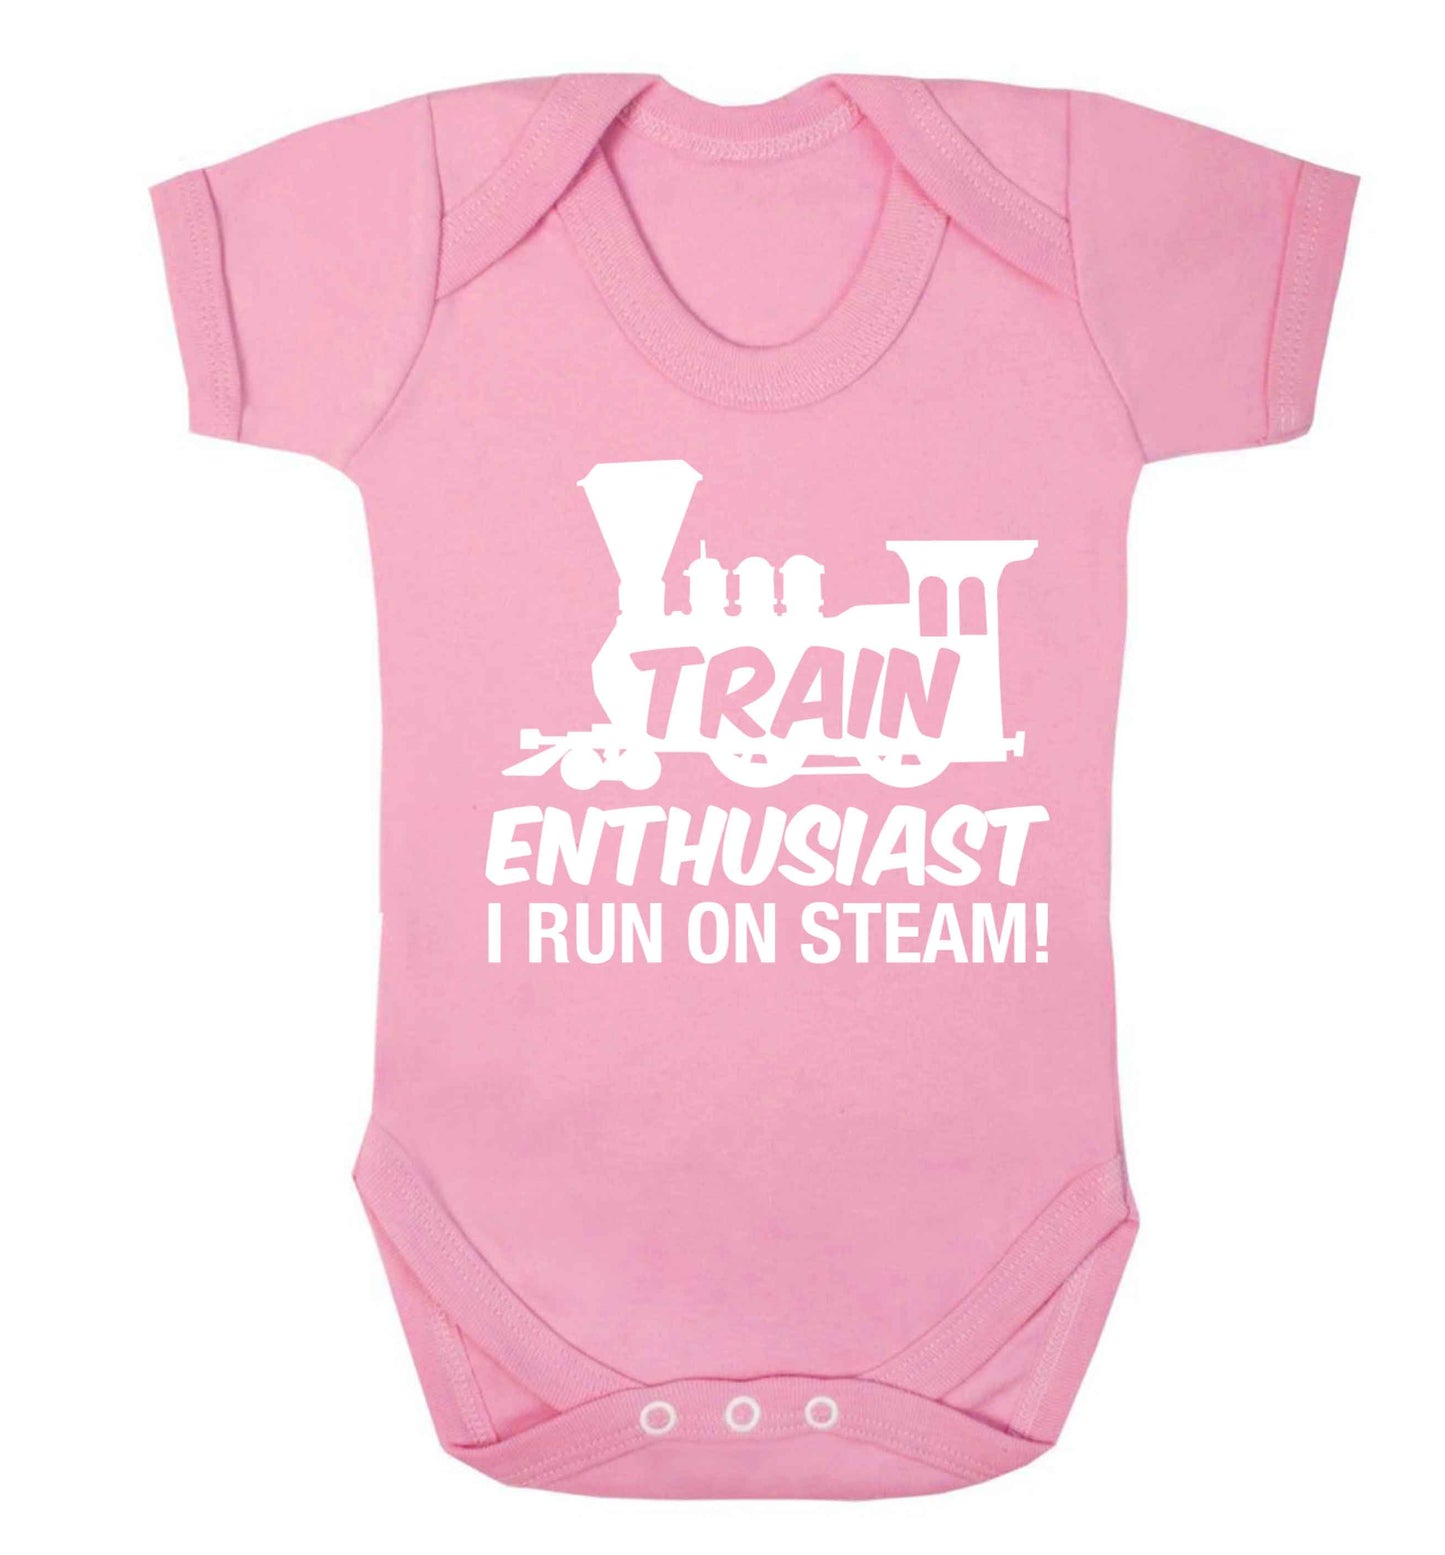 Train enthusiast I run on steam Baby Vest pale pink 18-24 months